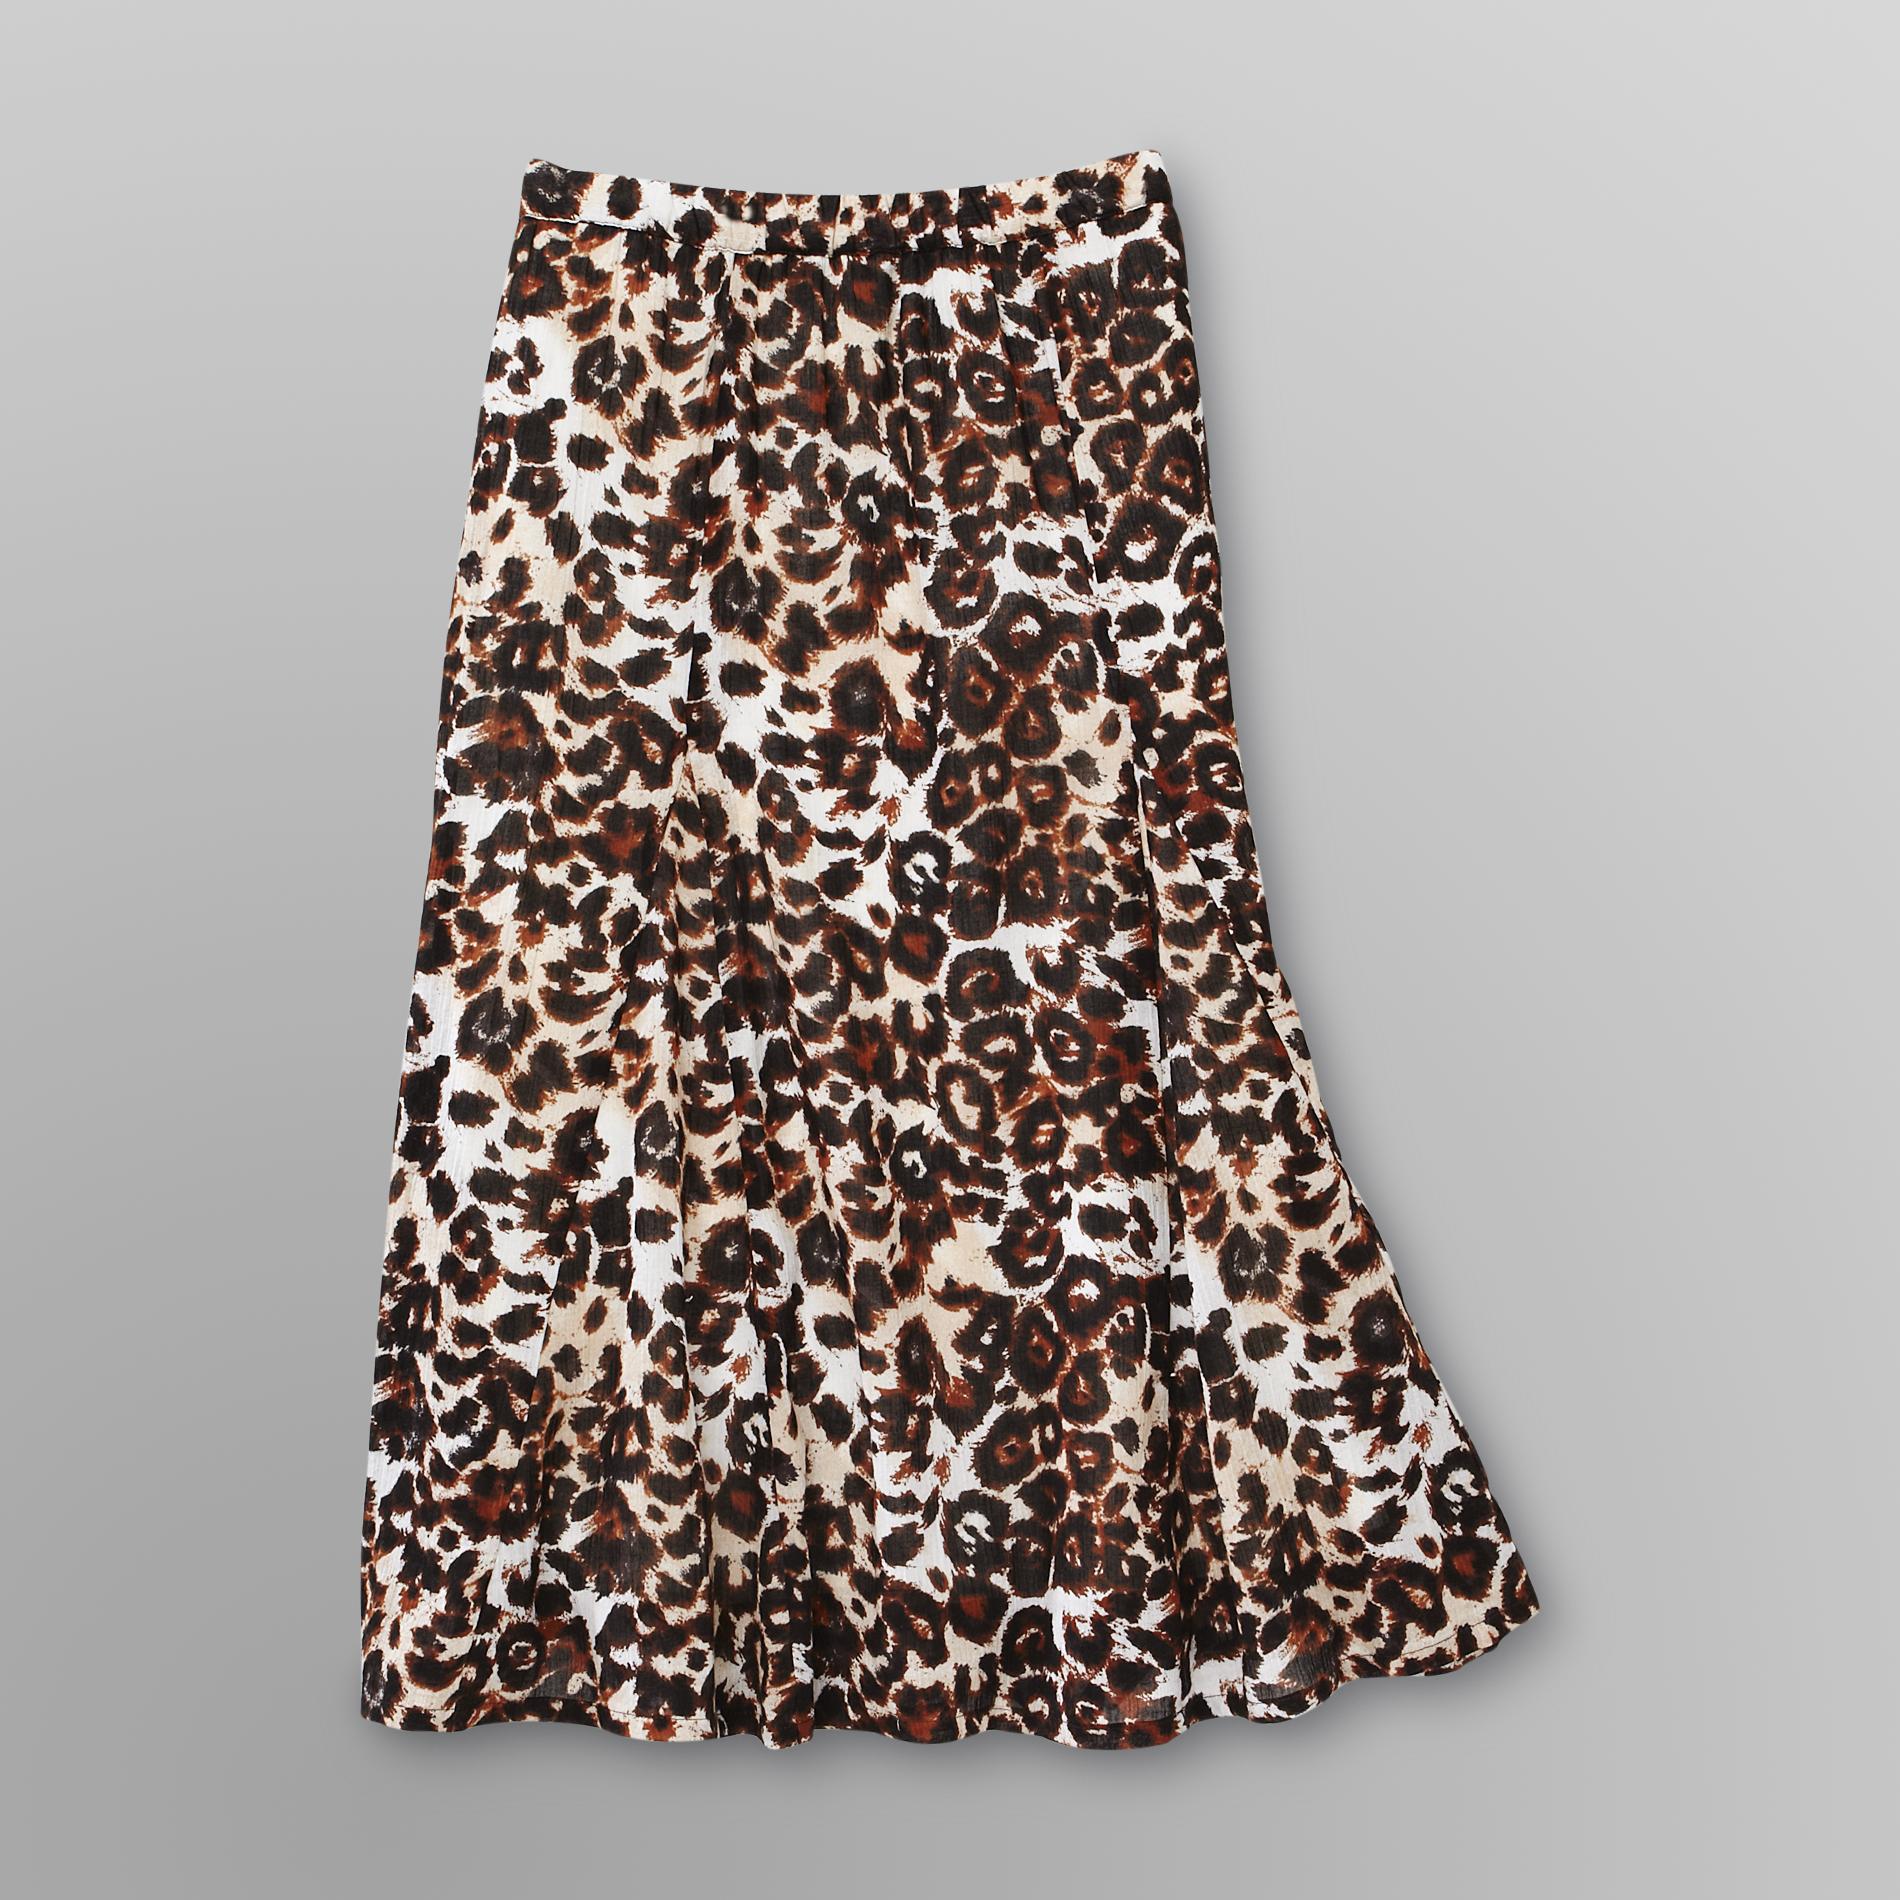 Jaclyn Smith Women's Crepe Skirt - Leopard Print